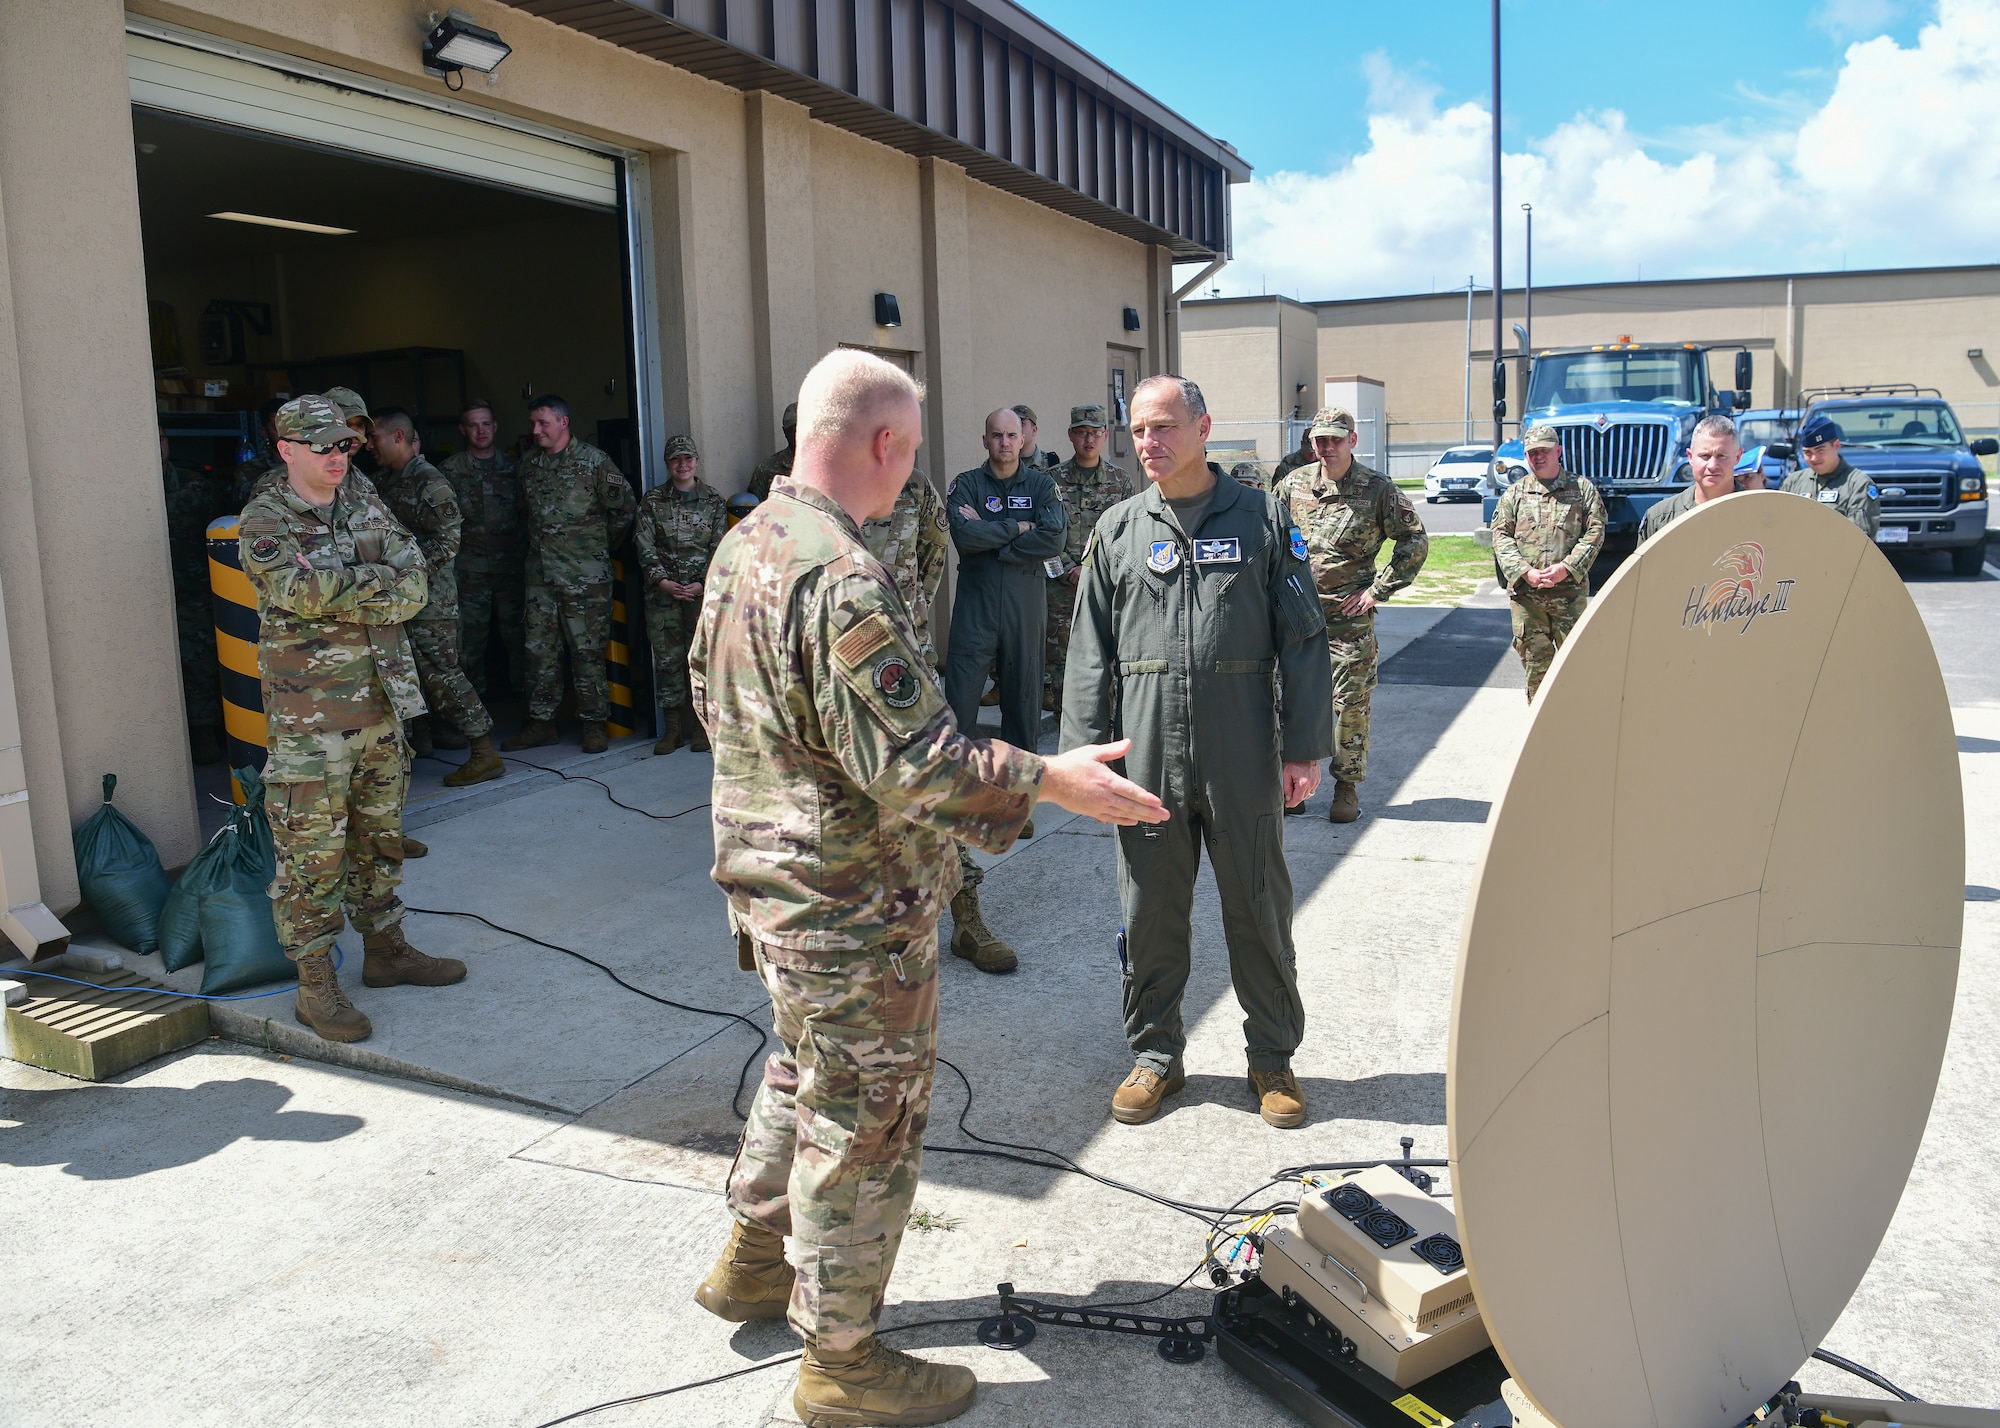 Military members talk around a satellite dish.